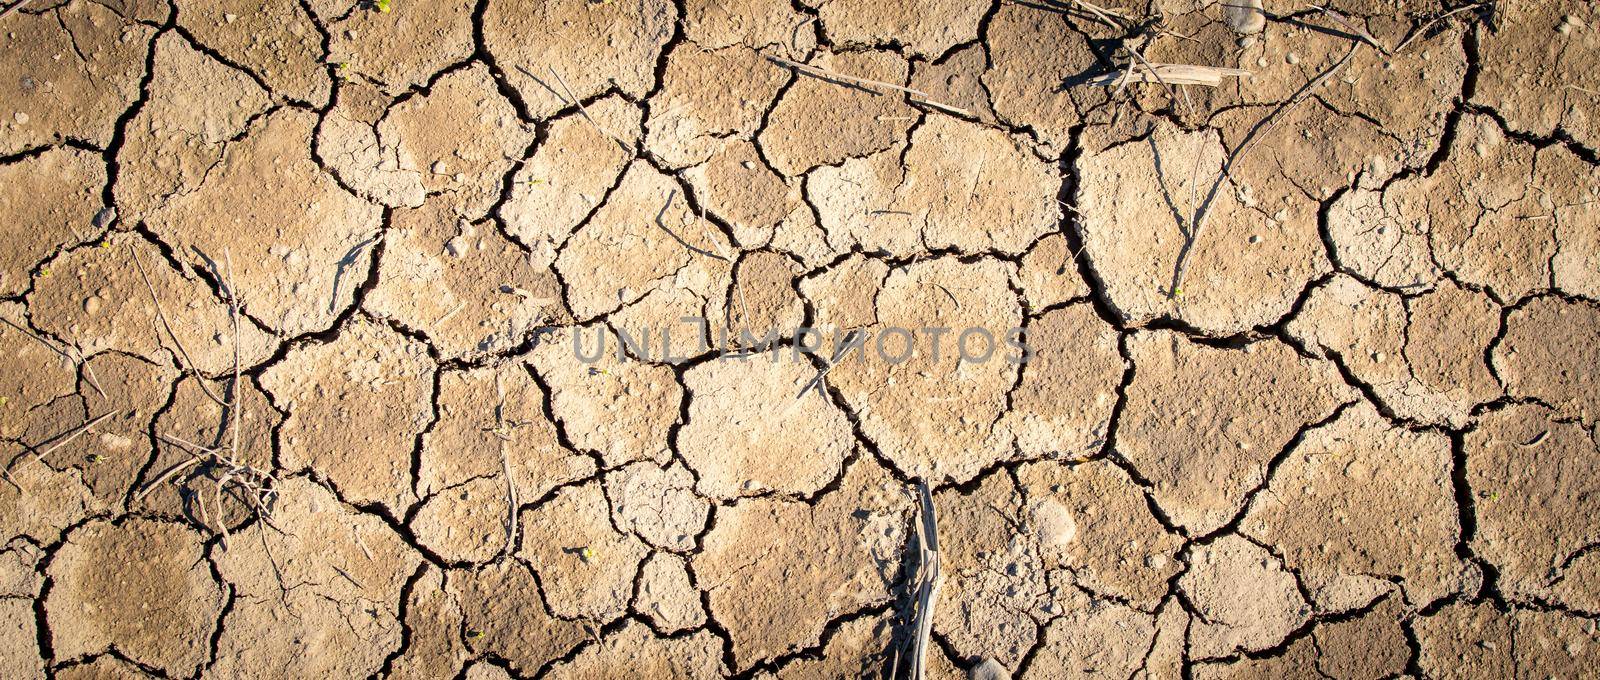 Dry cracked earth, global warming by Daxenbichler